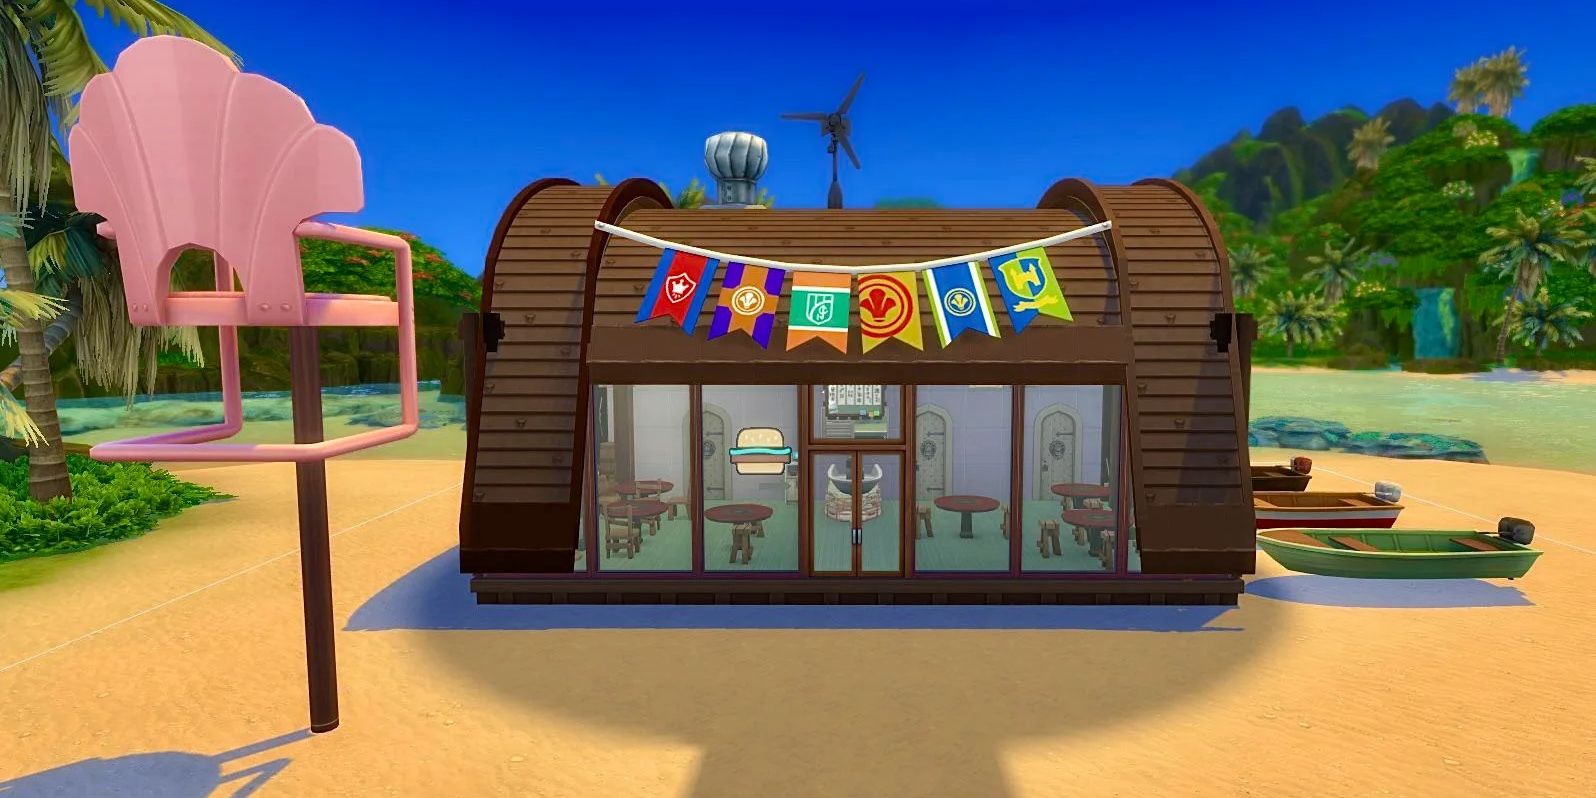 Spongebob's Krusty Krab built in The Sims 4.